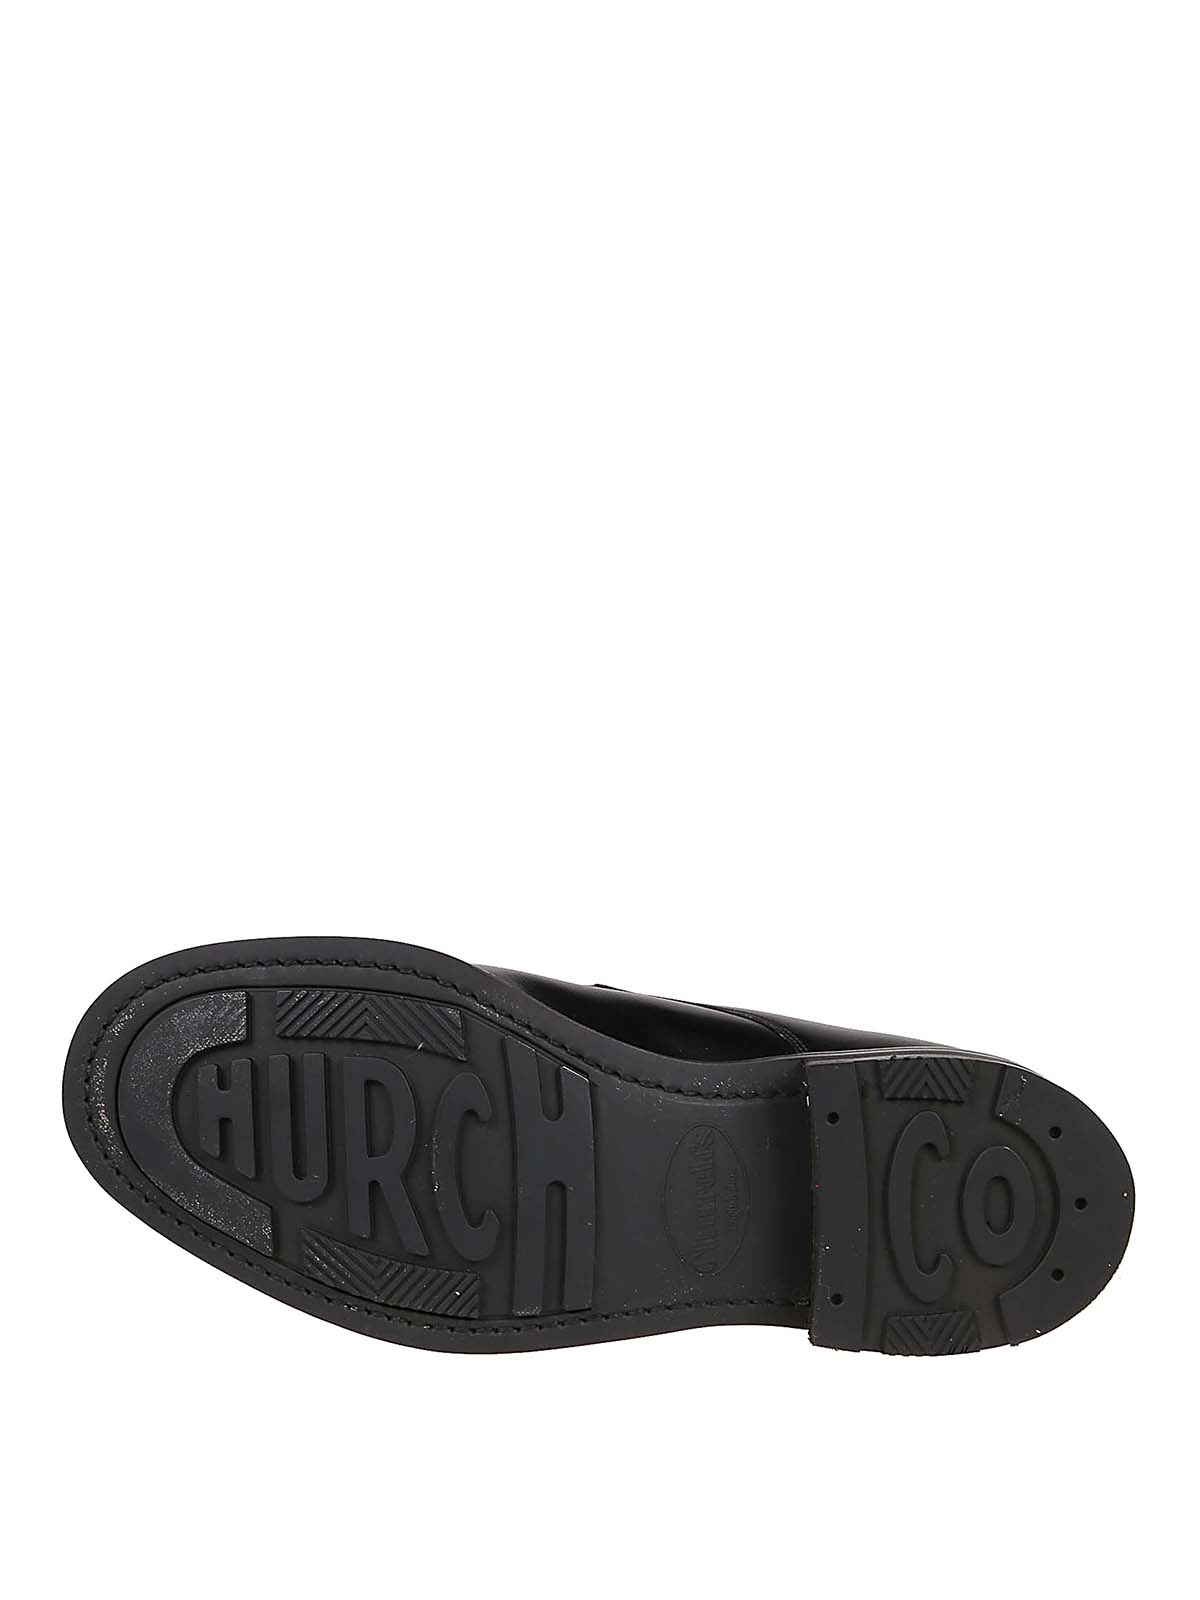 church wootton boots